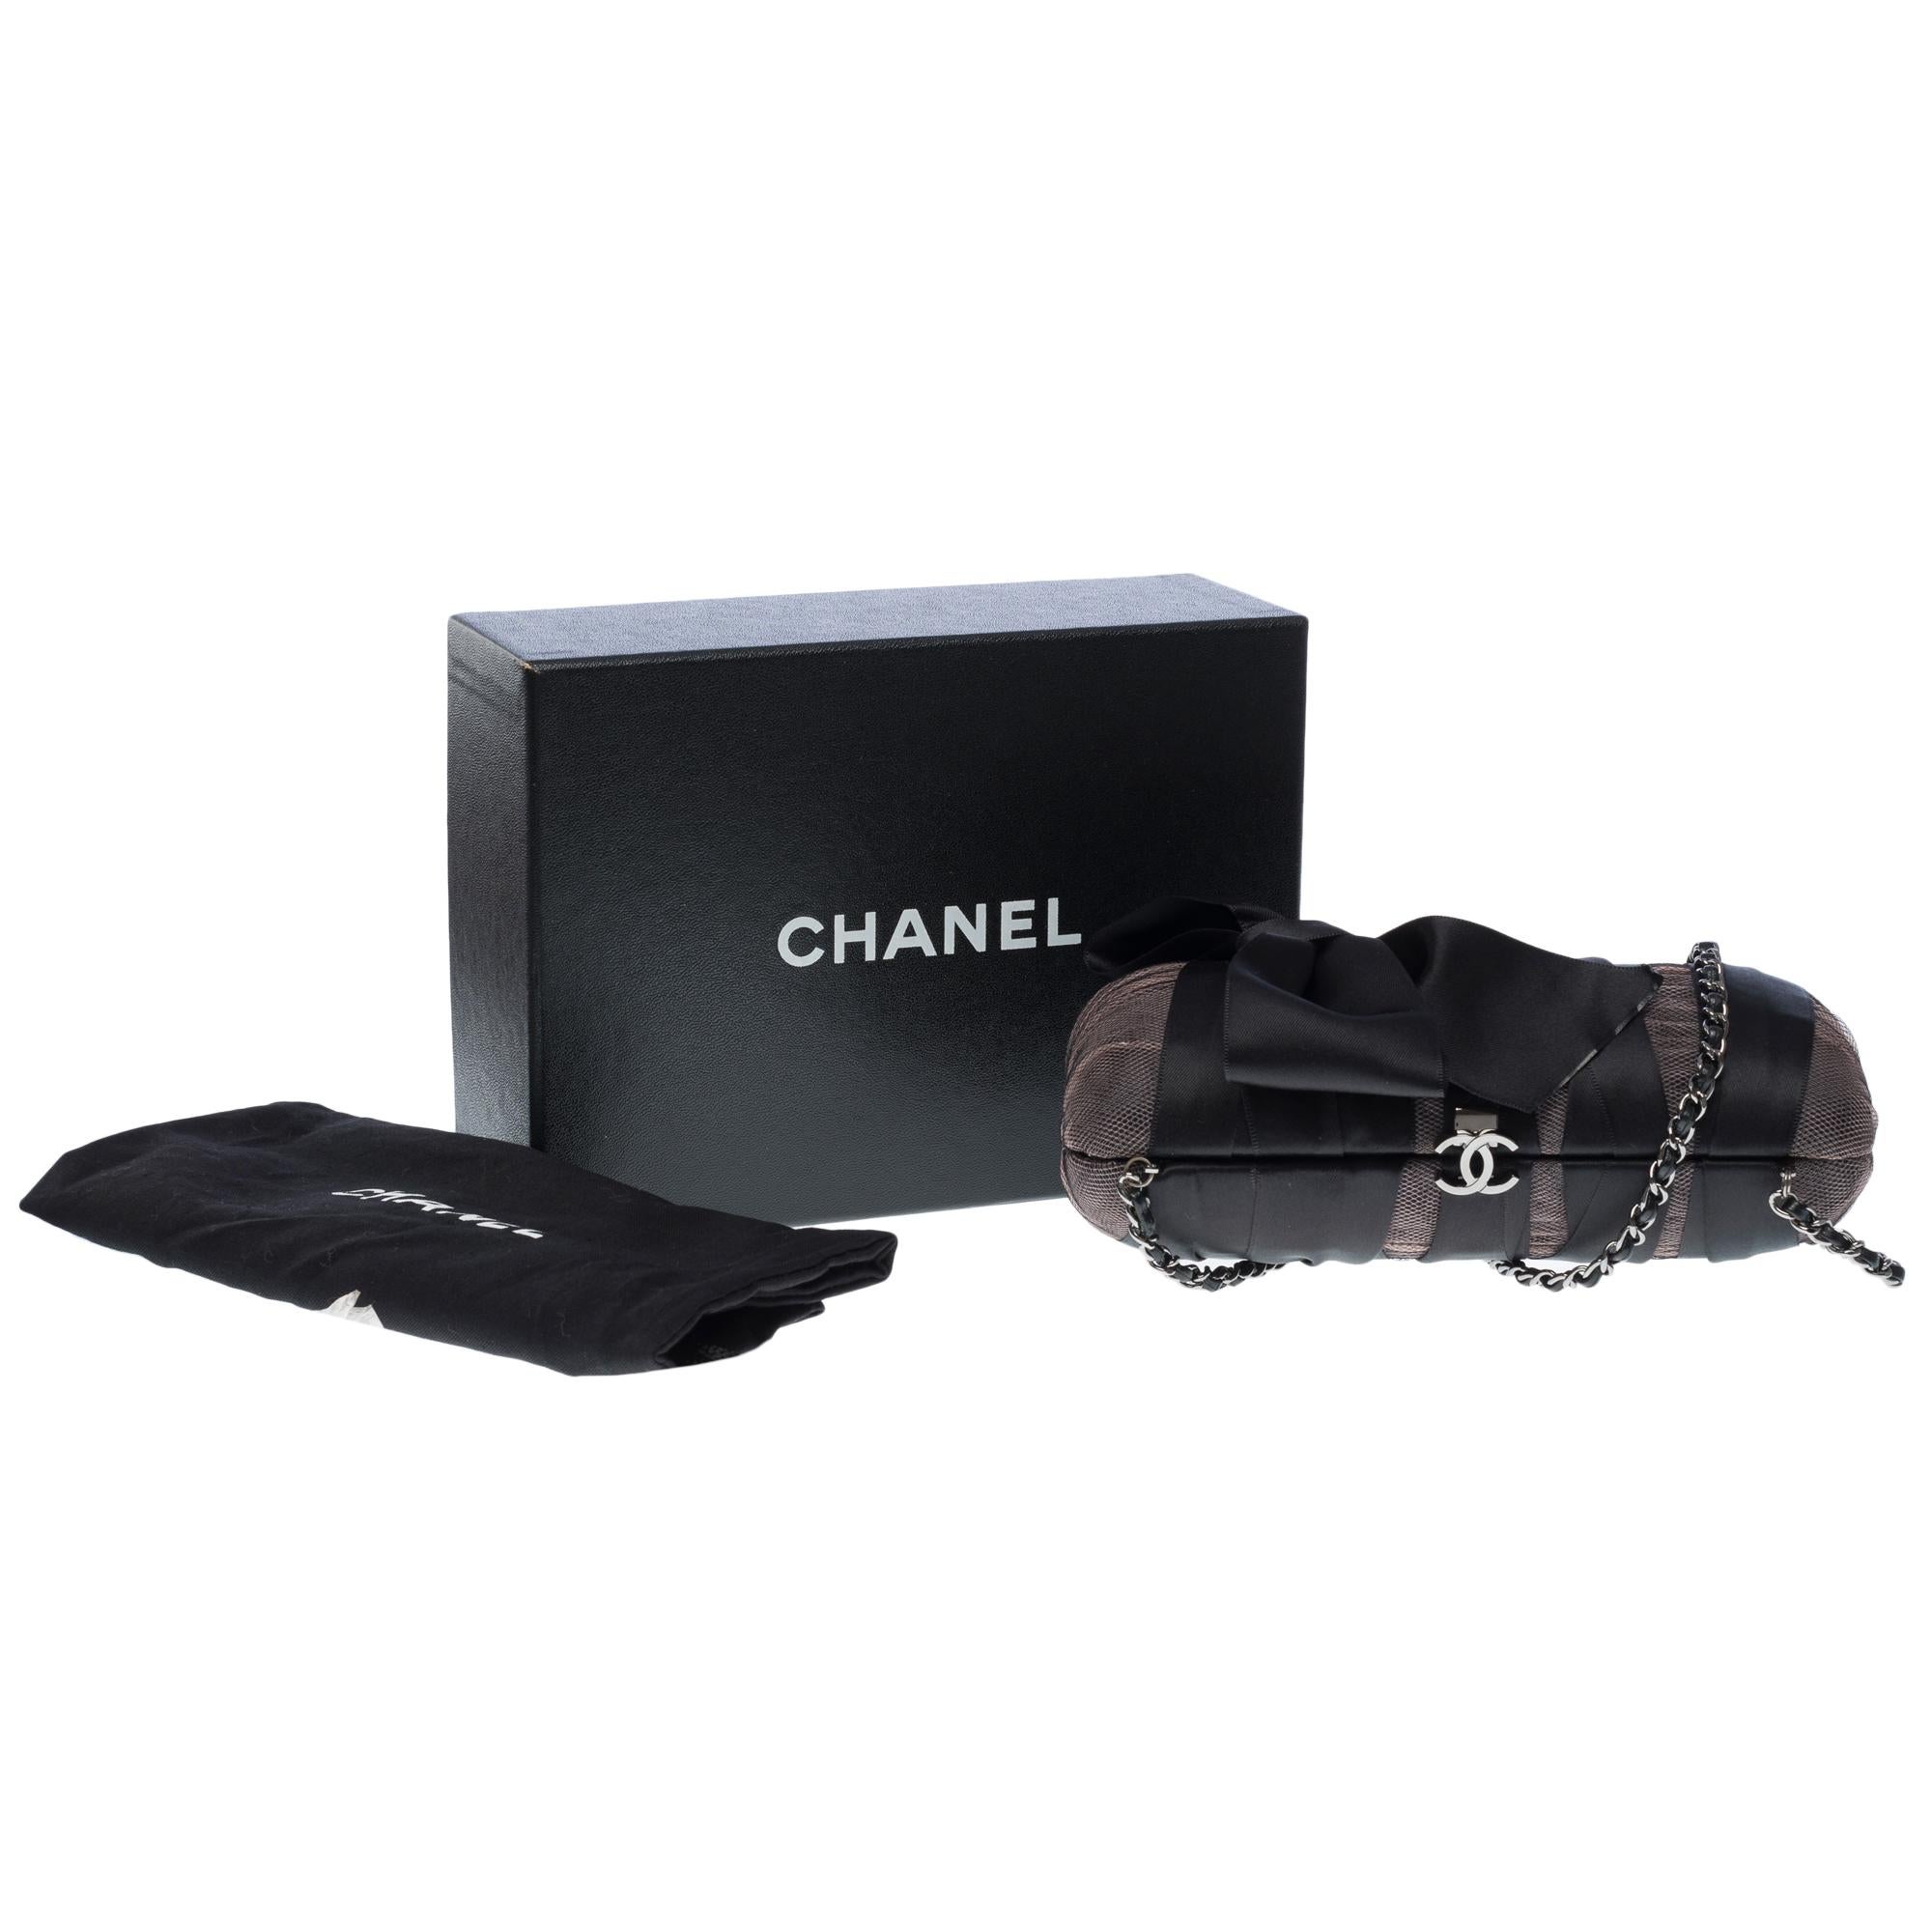 Rare limited edition Chanel Minaudière shoulder bag in black silk satin, BSHW For Sale 1